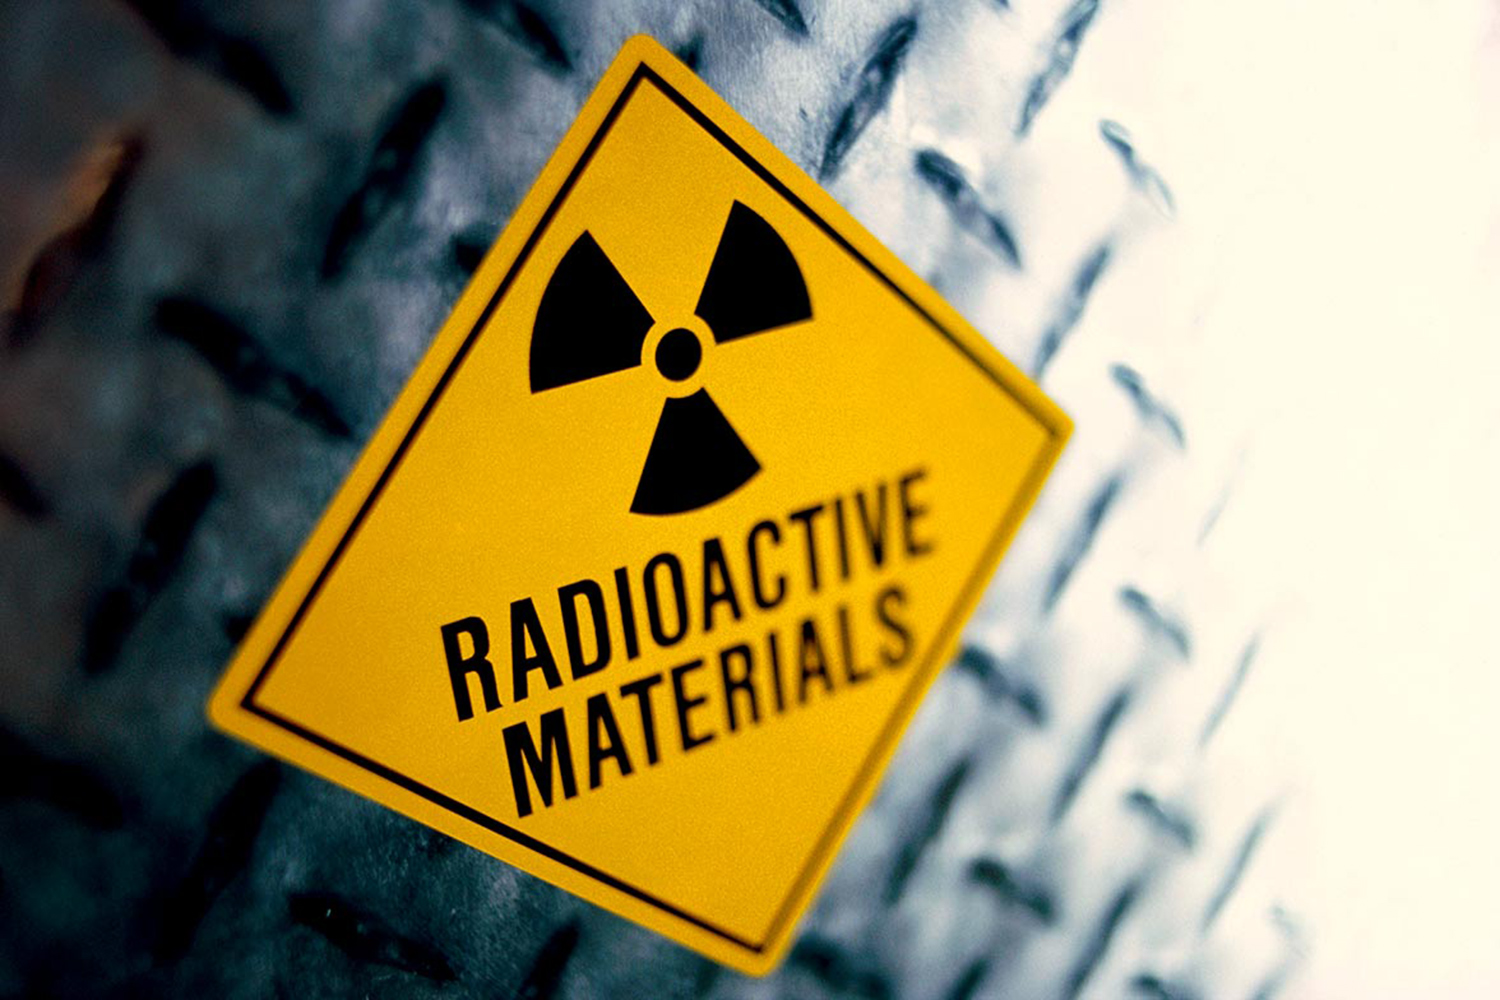 yellow hazard sign reads: Radioactive materials